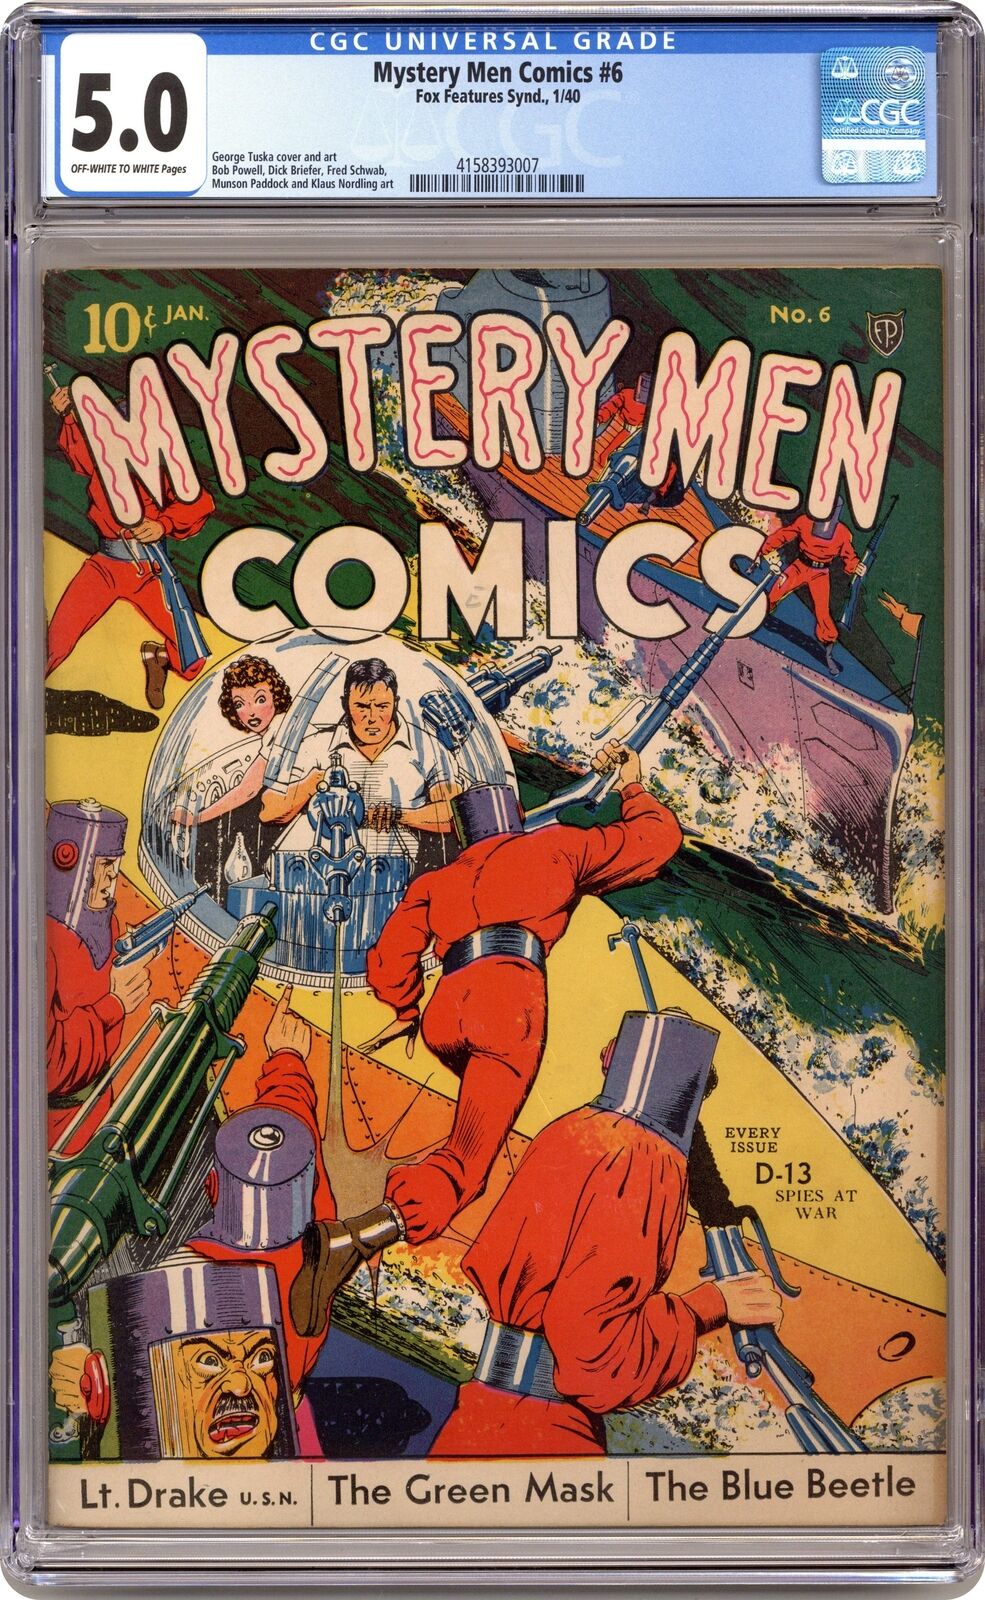 Mystery Men Comics #6 CGC 5.0 1940 4158393007